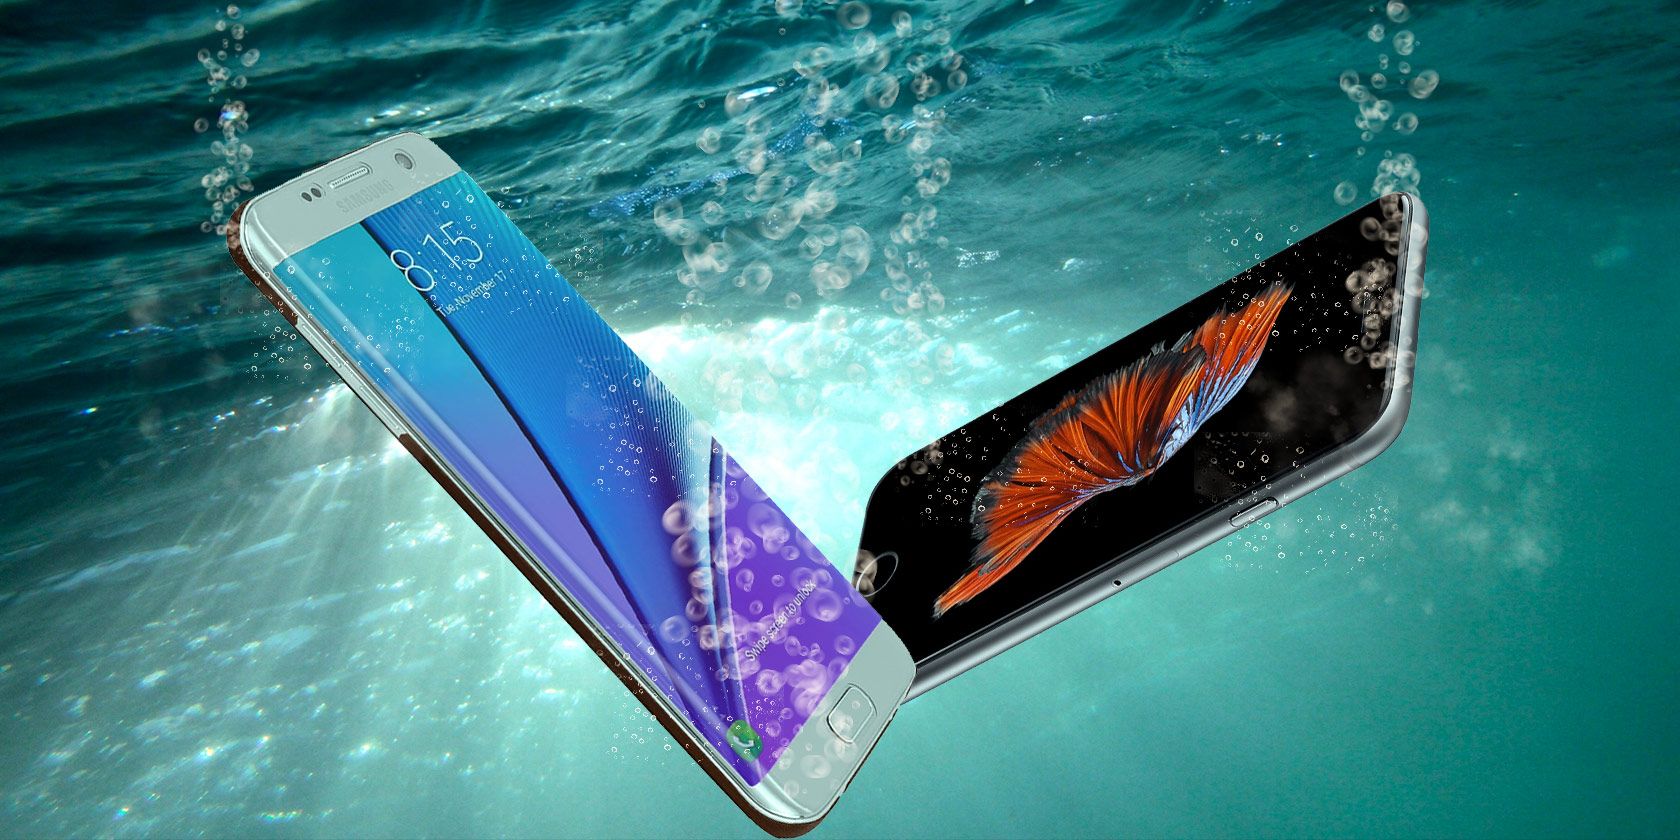 Two phones submerged underwater